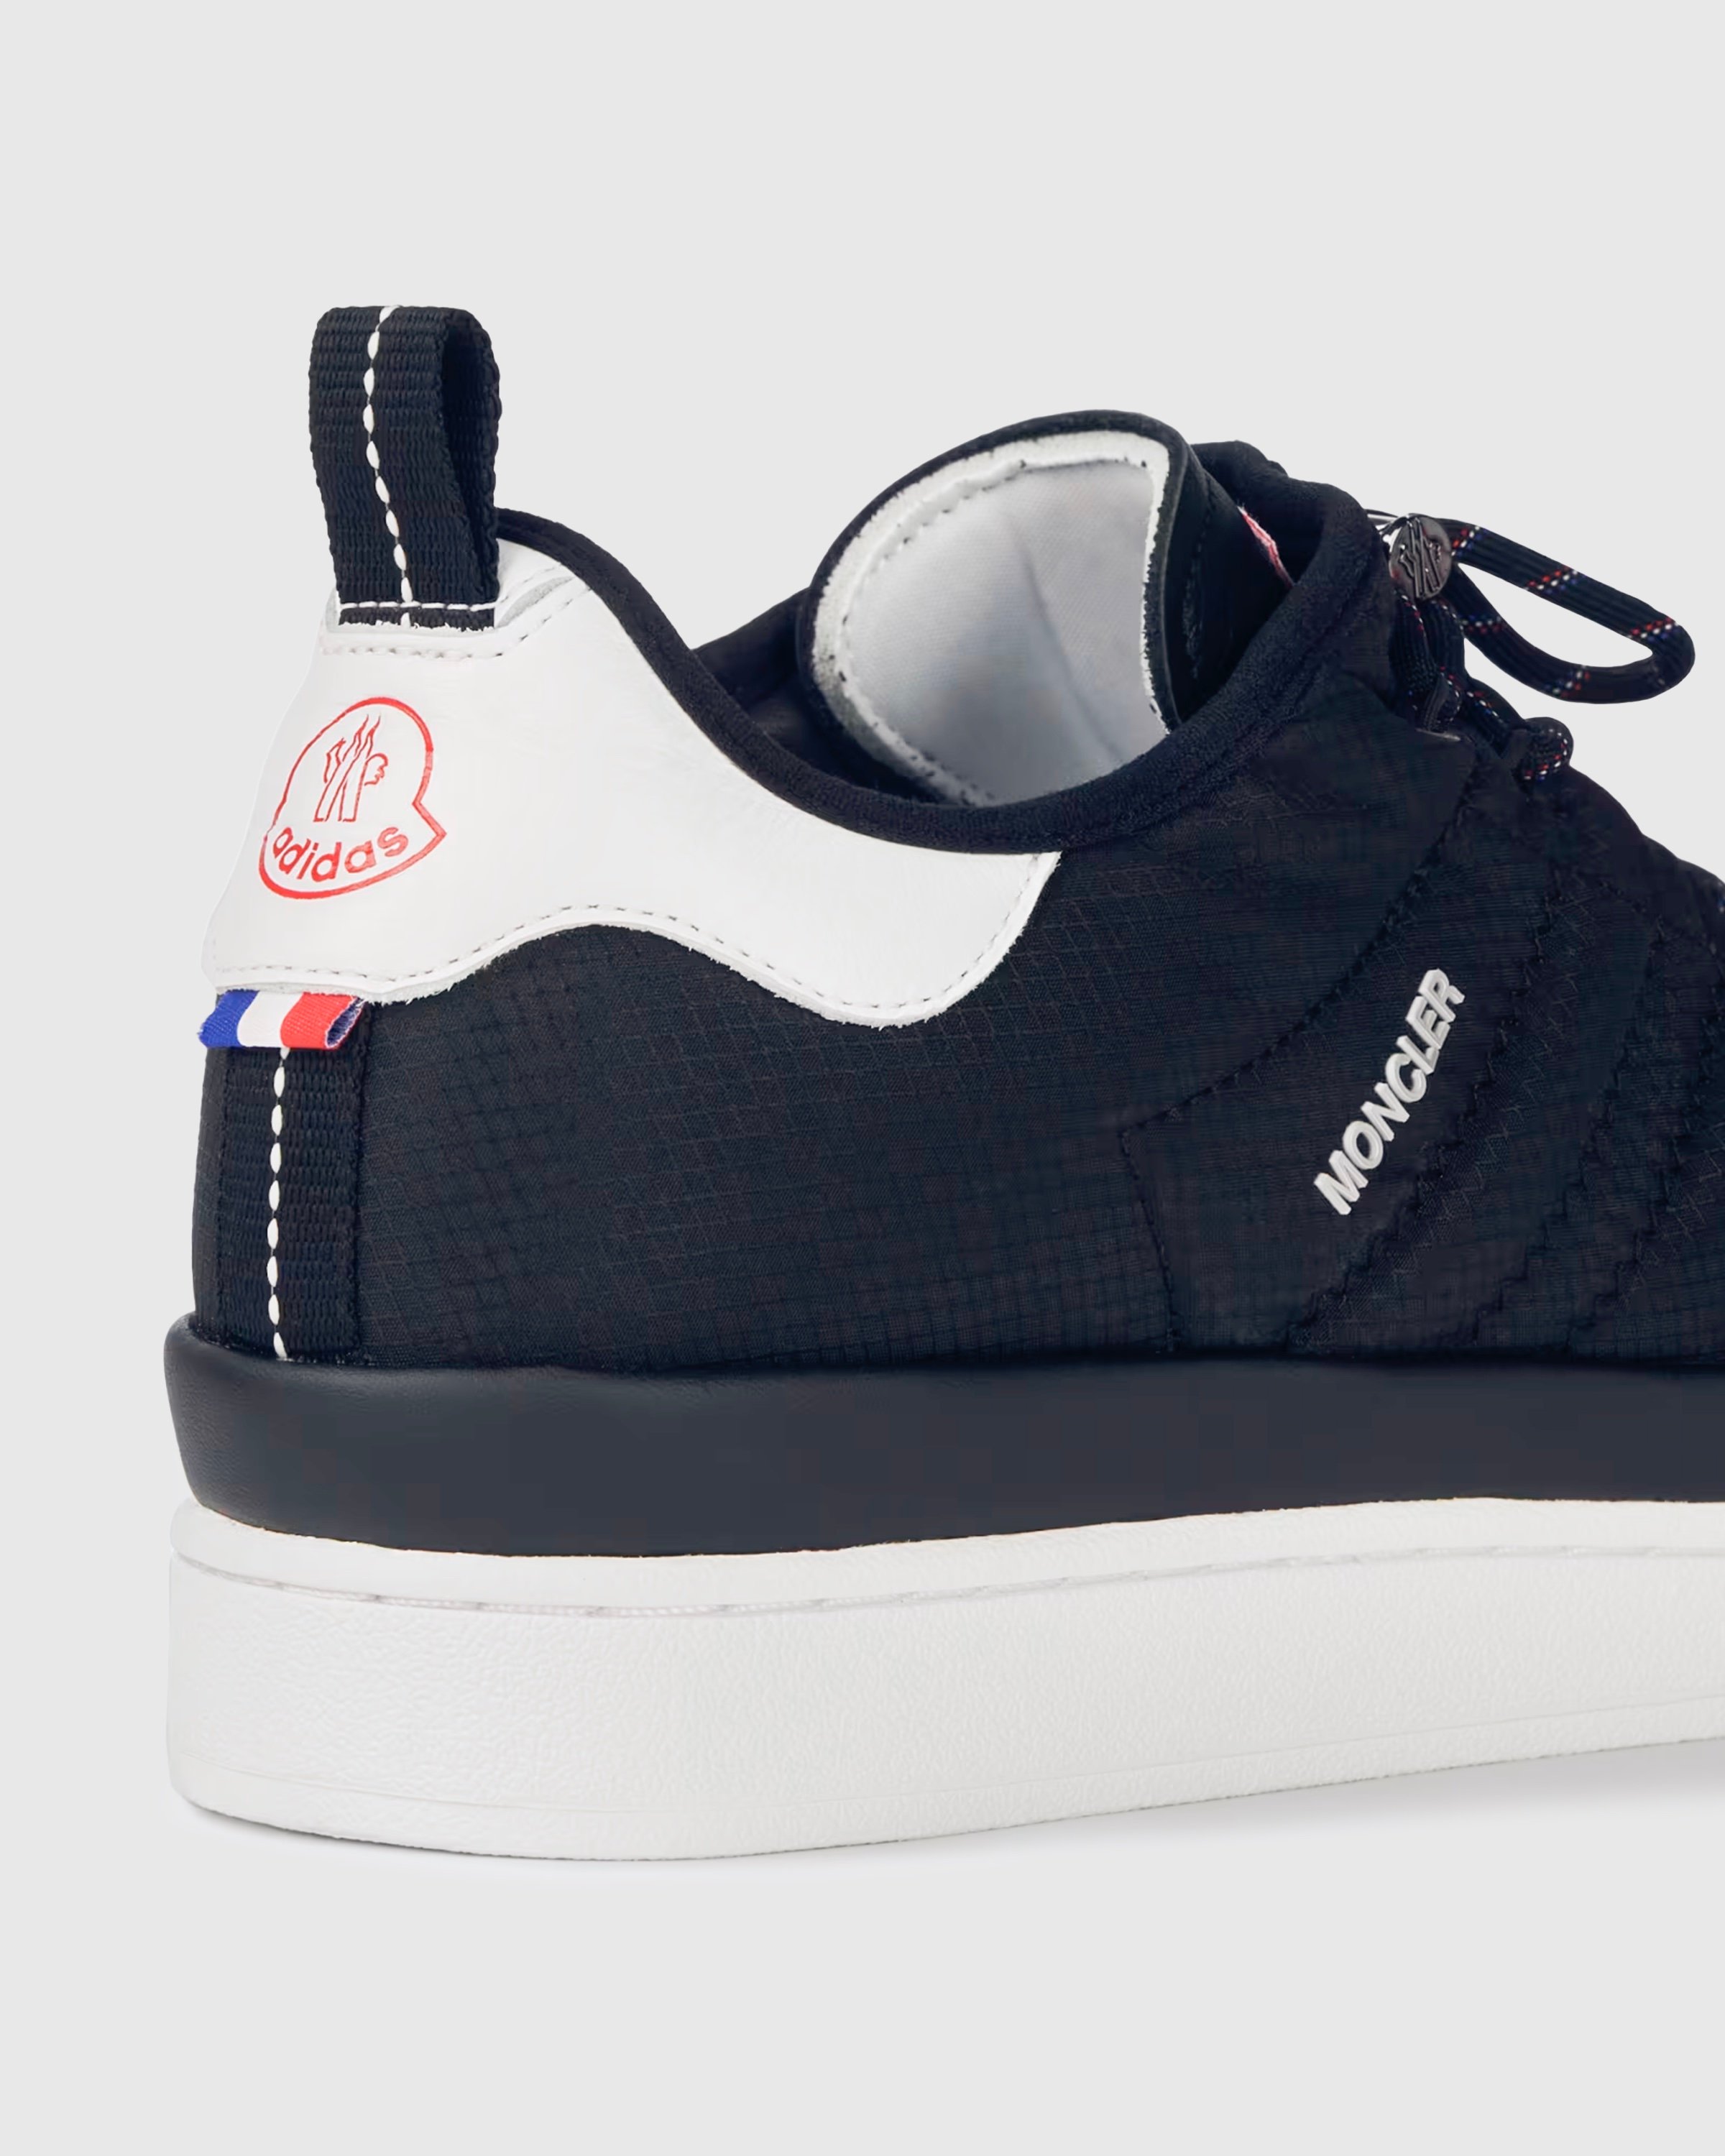 Moncler x adidas Originals - Campus Low Top Sneakers Black - Footwear - Black - Image 4